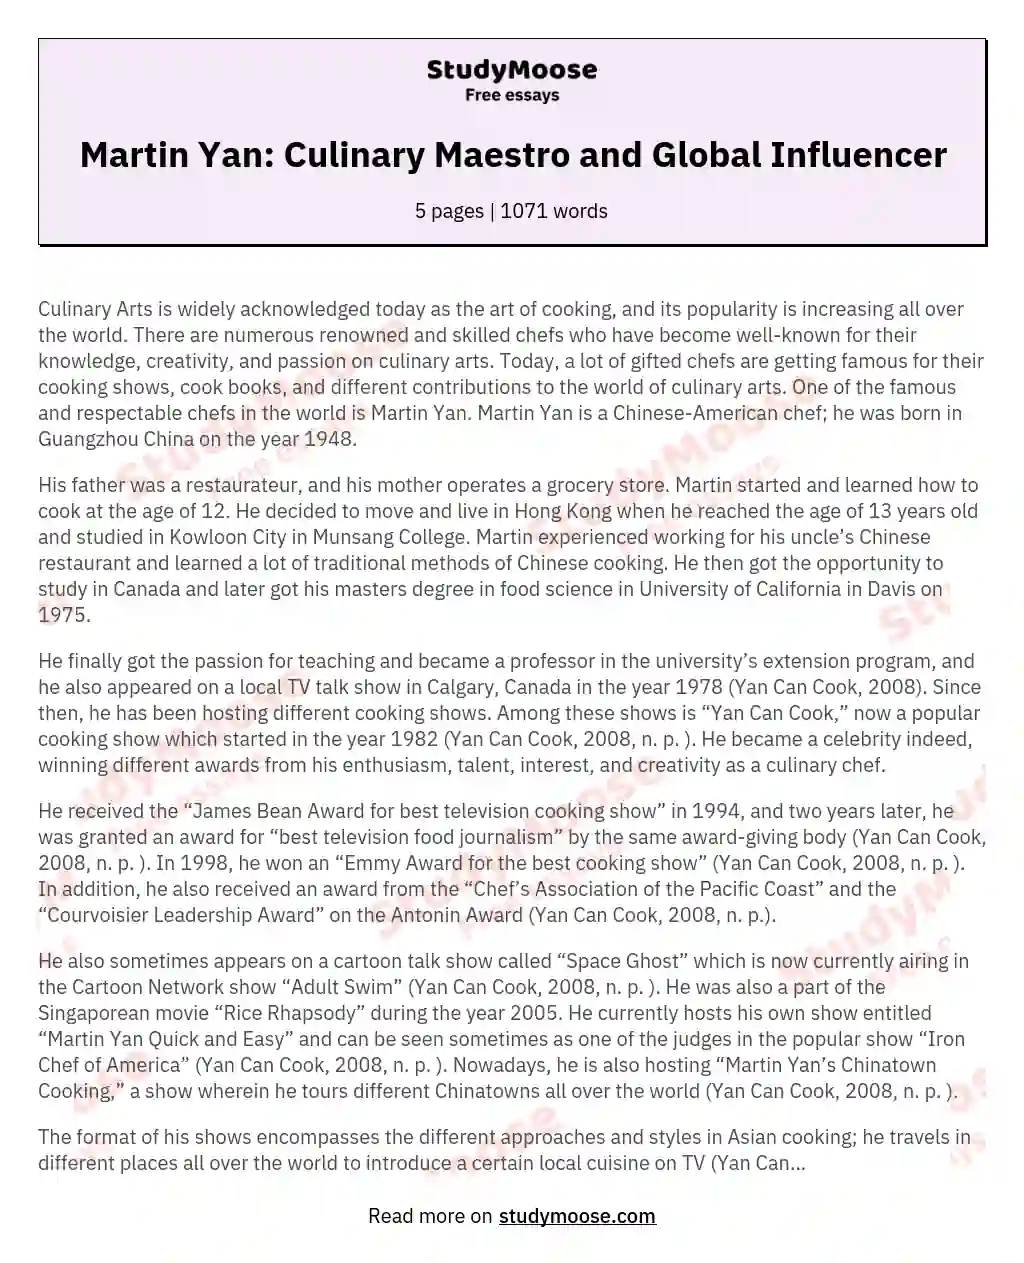 Martin Yan: Culinary Maestro and Global Influencer essay